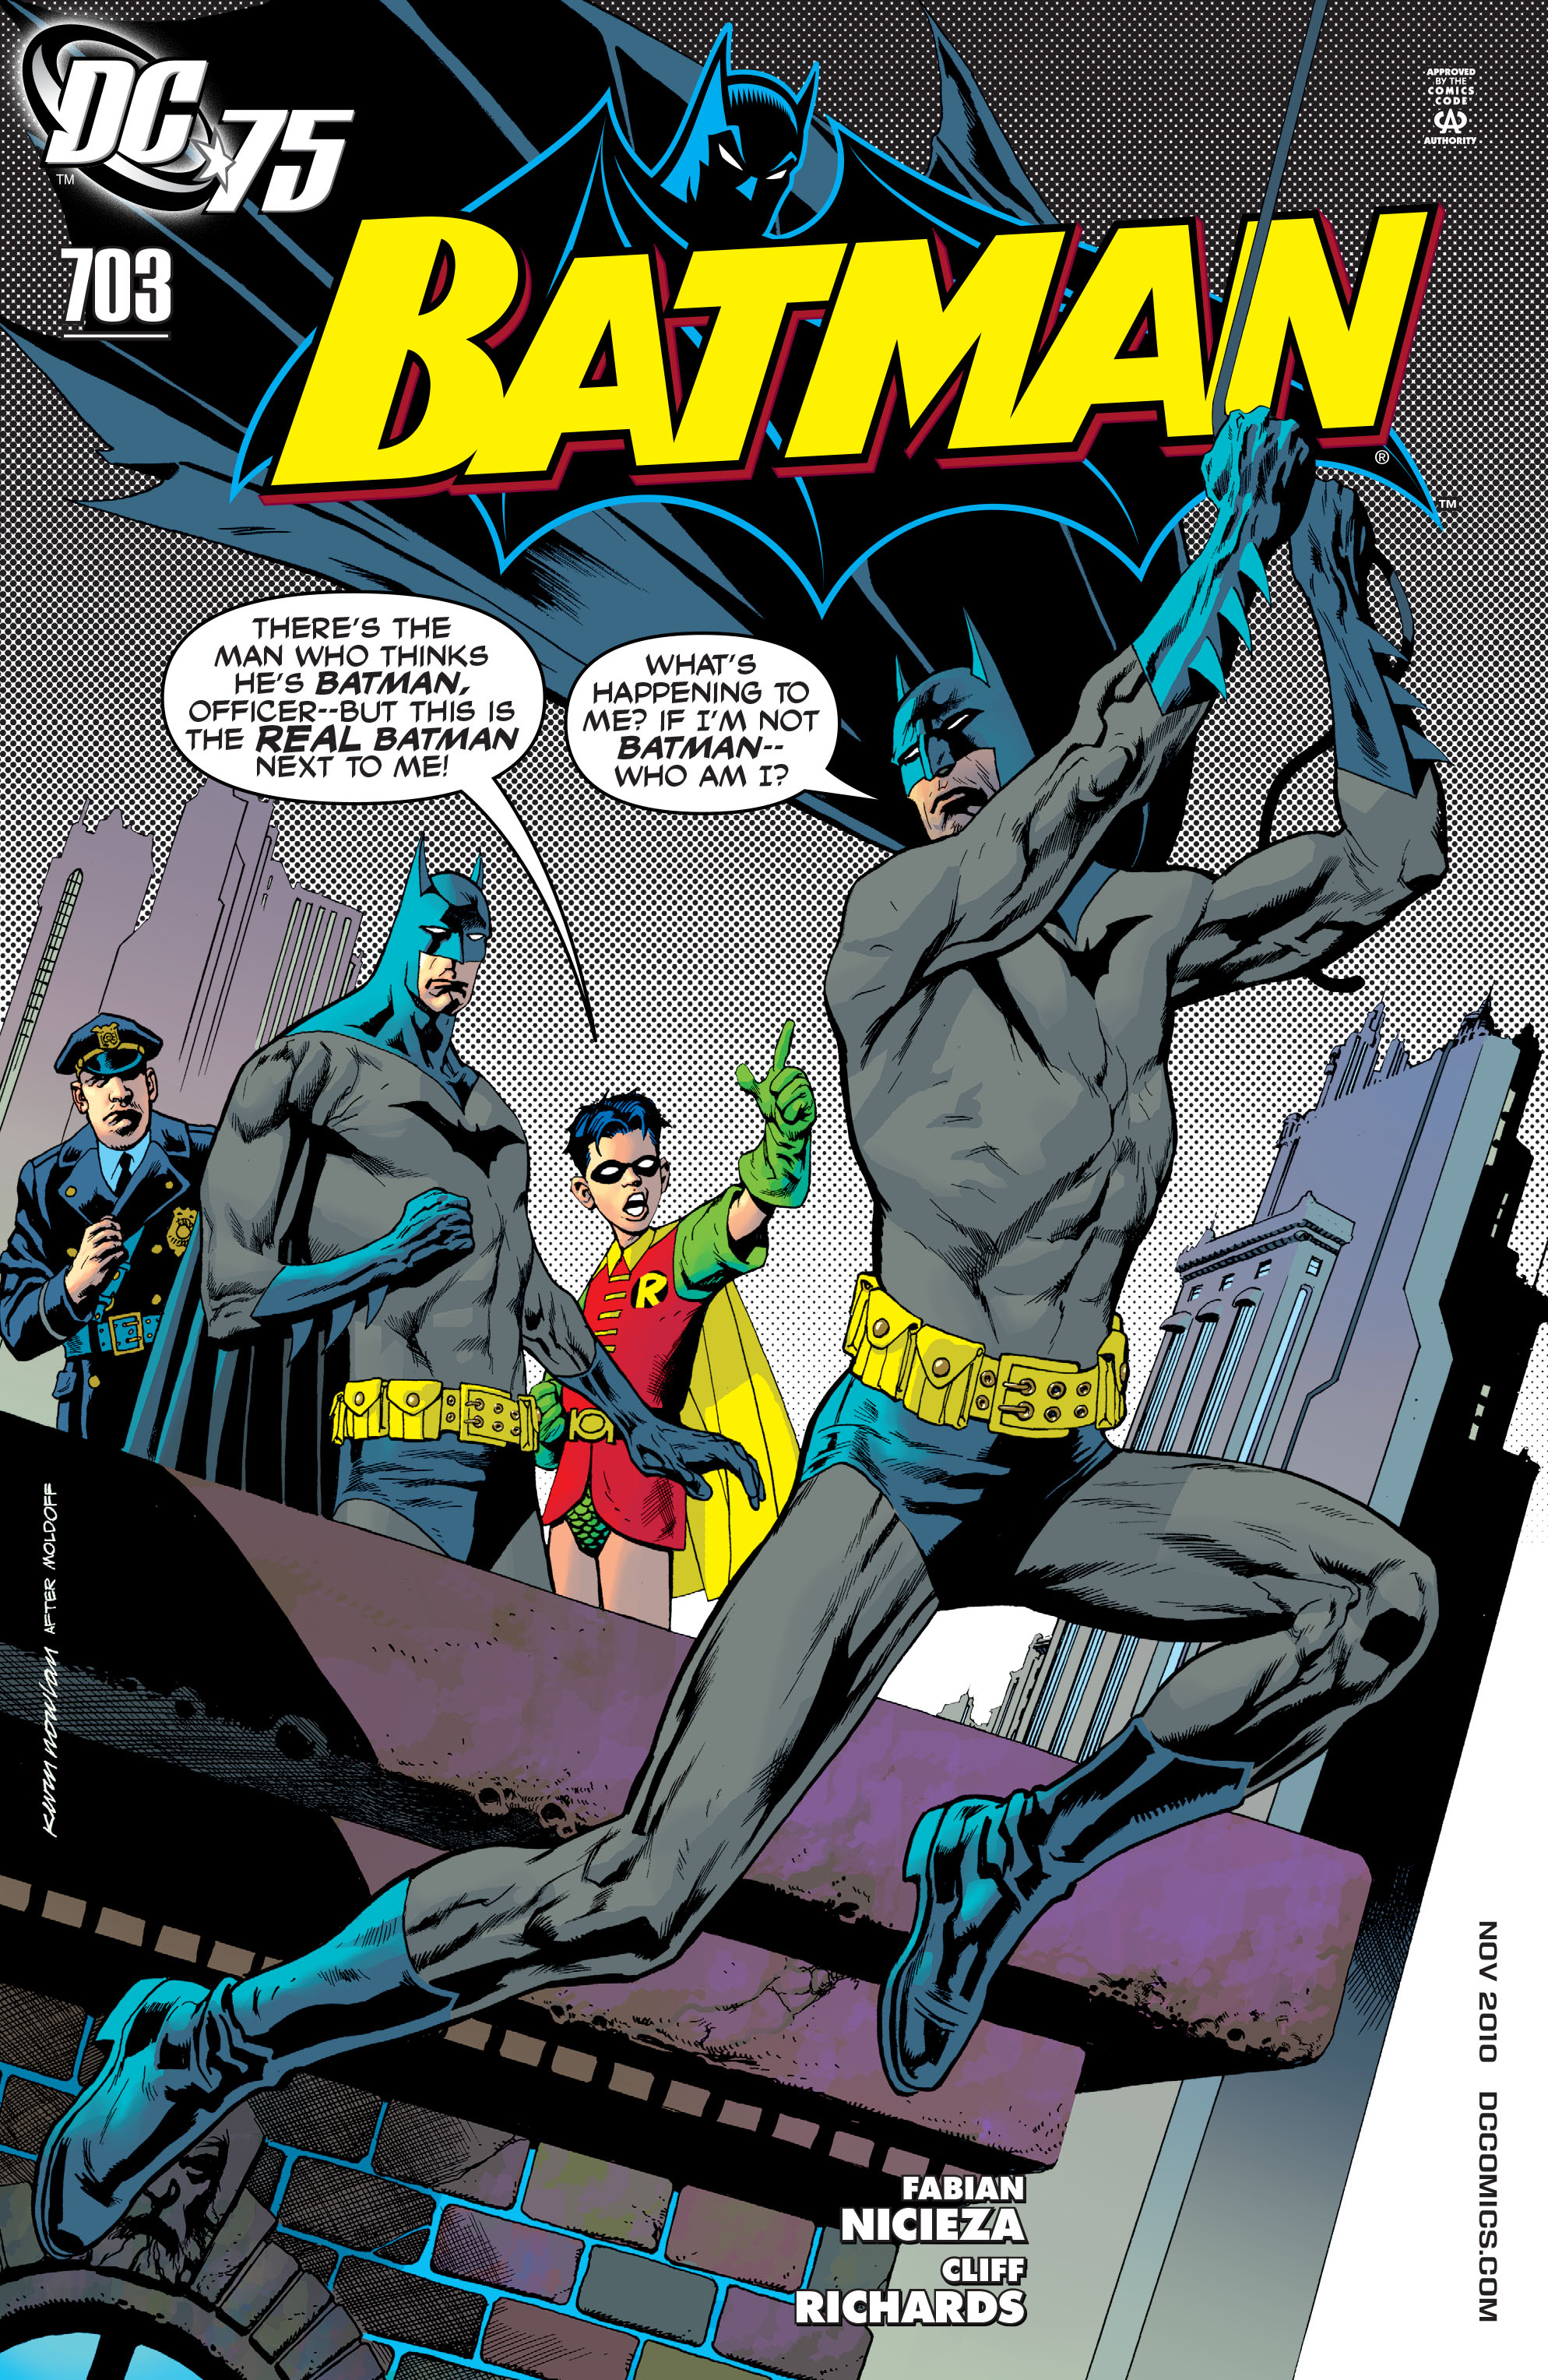 Read online Batman (1940) comic -  Issue #703 - 2